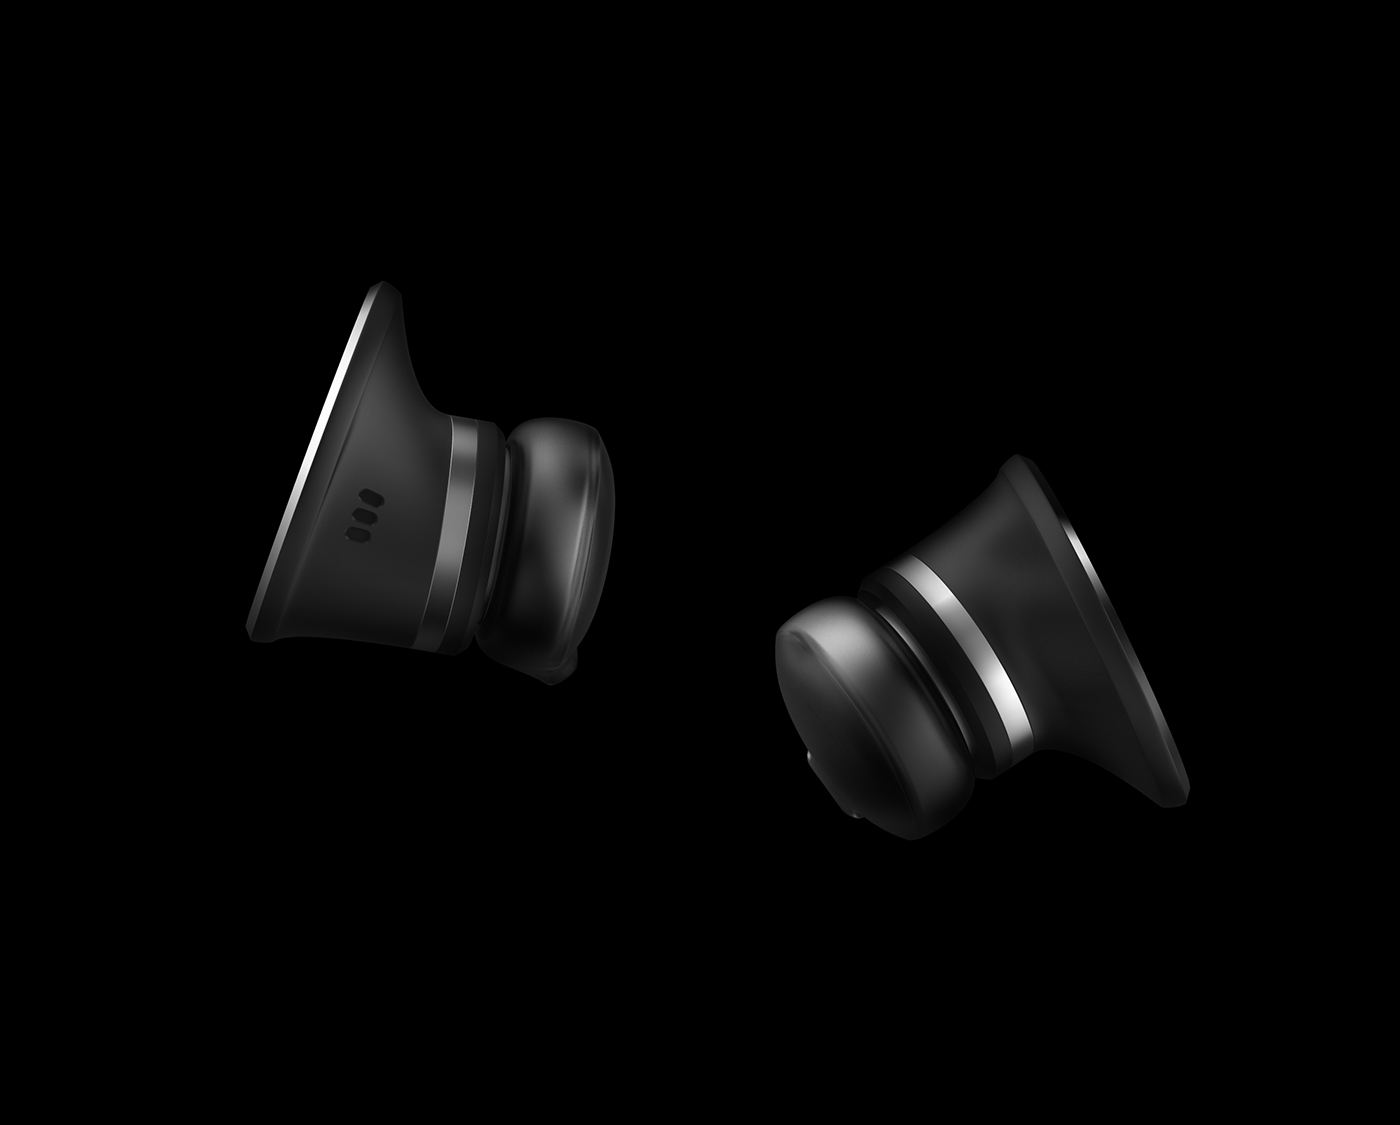 headphone earphone speaker cradle sound minkyo concept module Samsung music